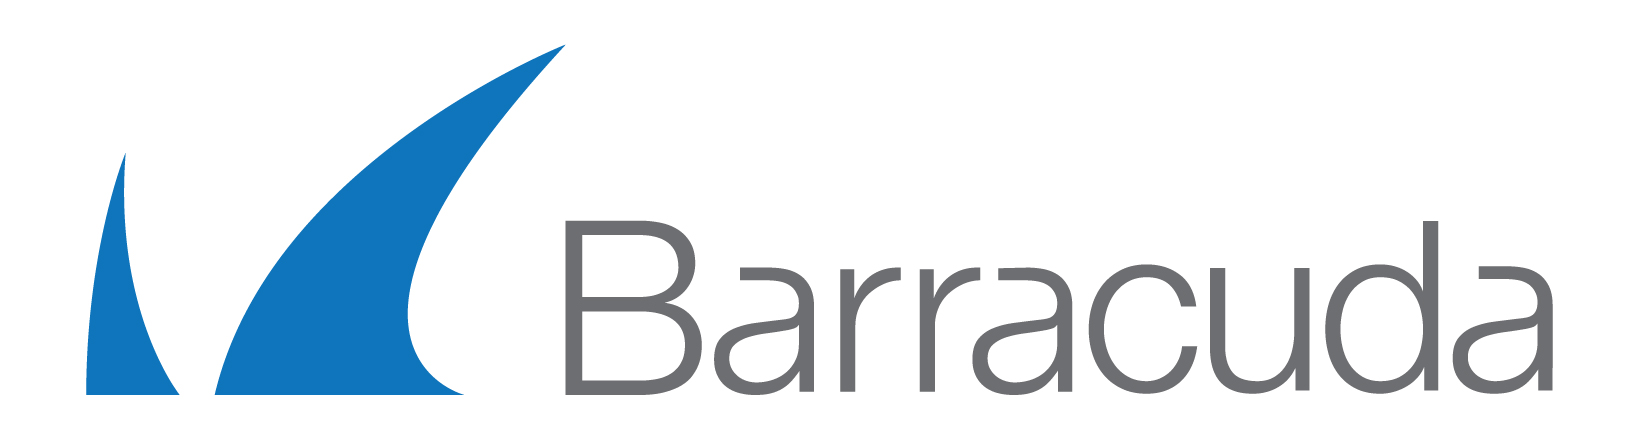 barracuda-logo.jpg